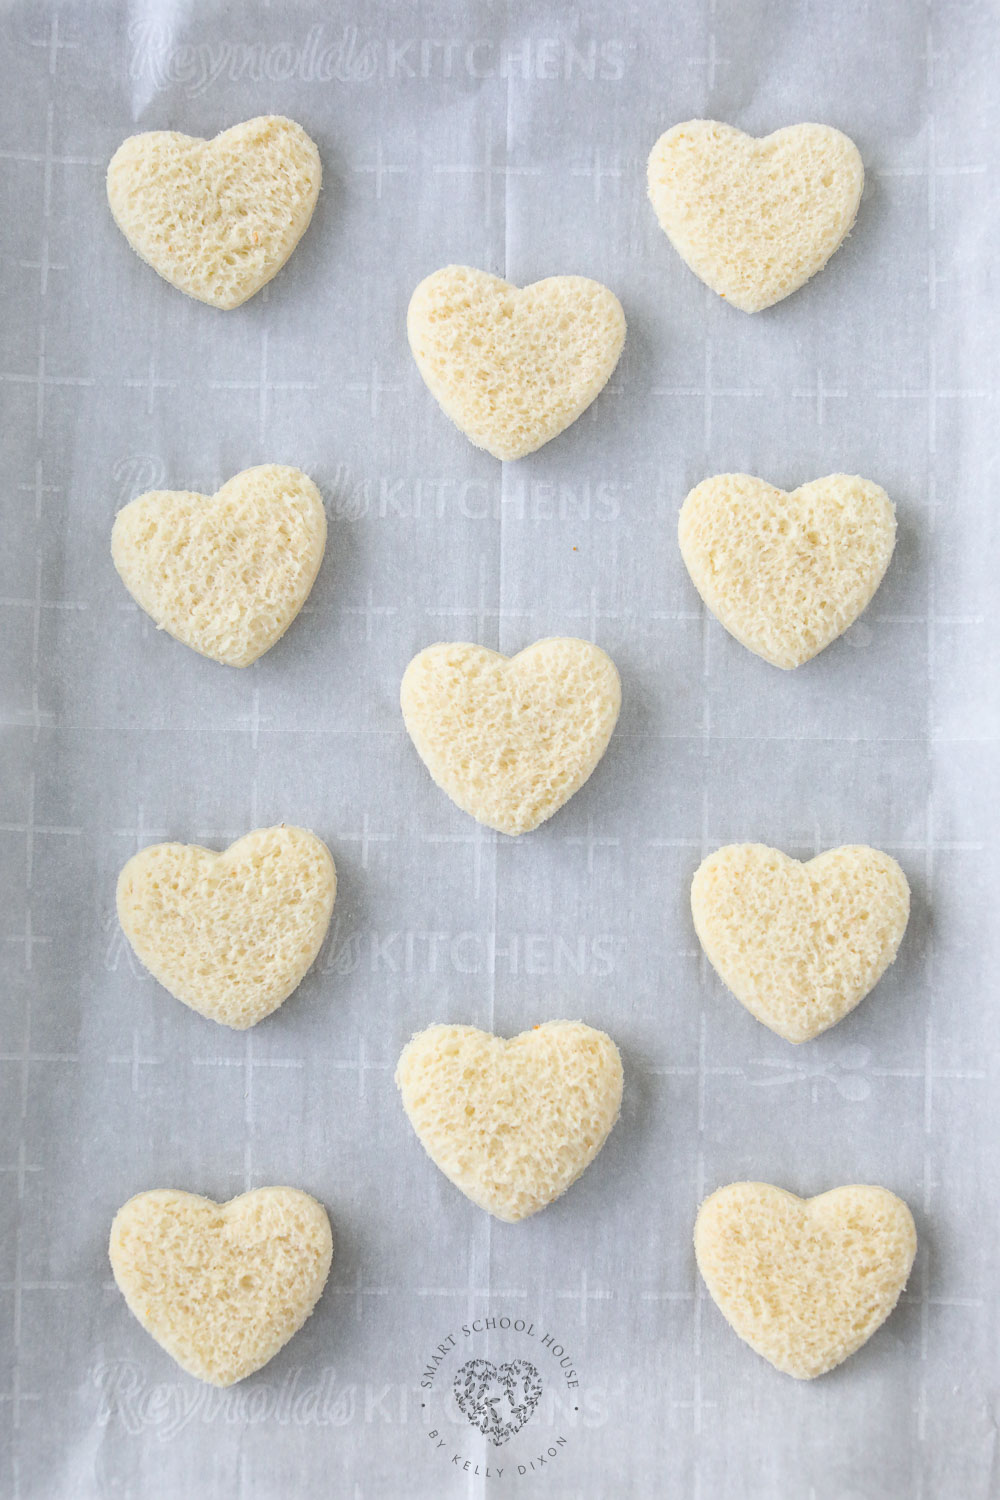 Bread hearts on a baking sheet